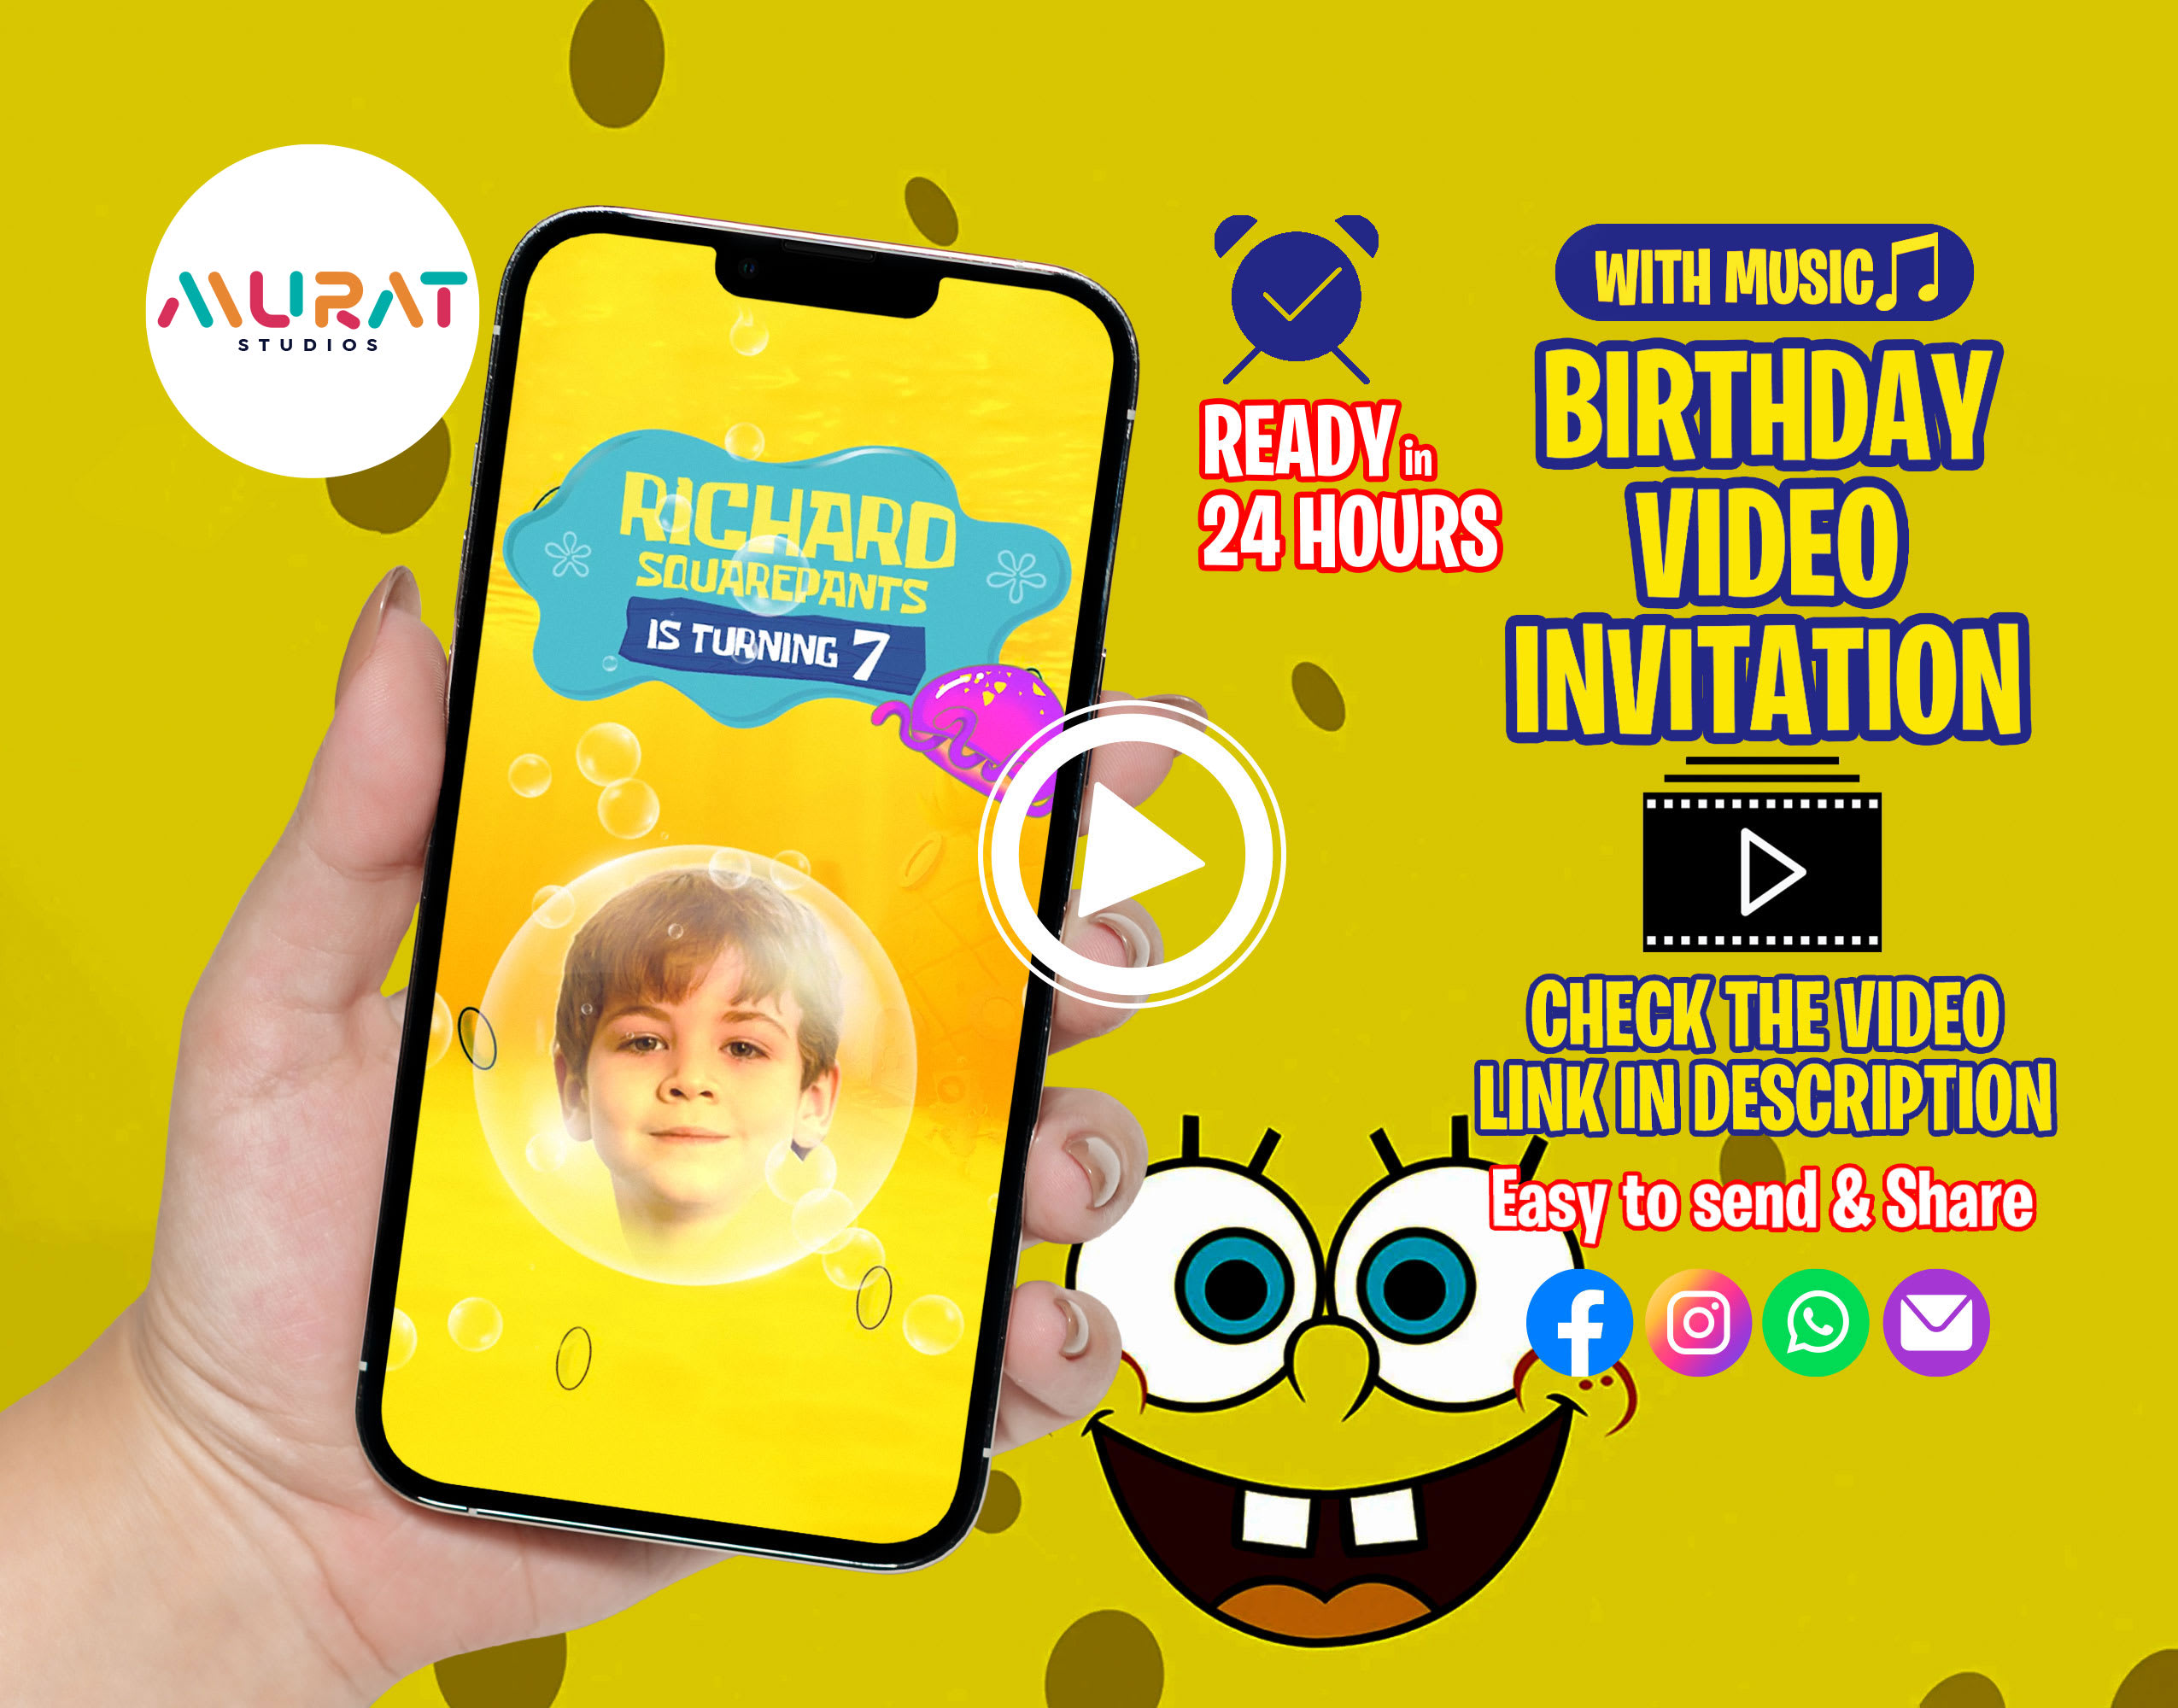 Spongebob birthday video invitation for kids by Muratstudios